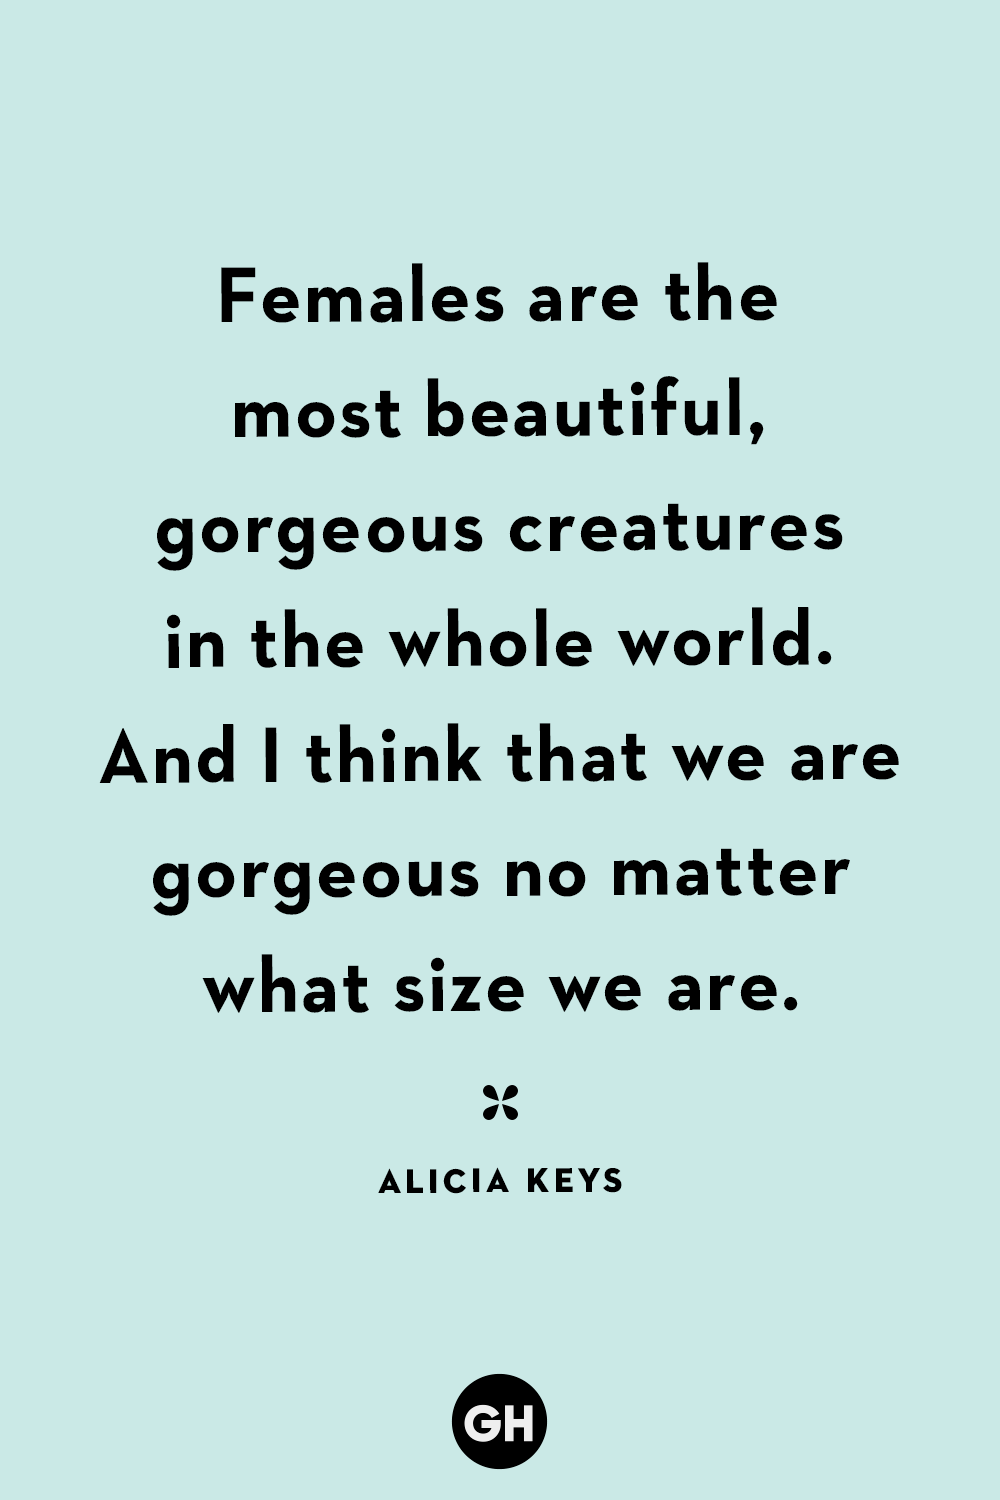 feminine beauty quotes